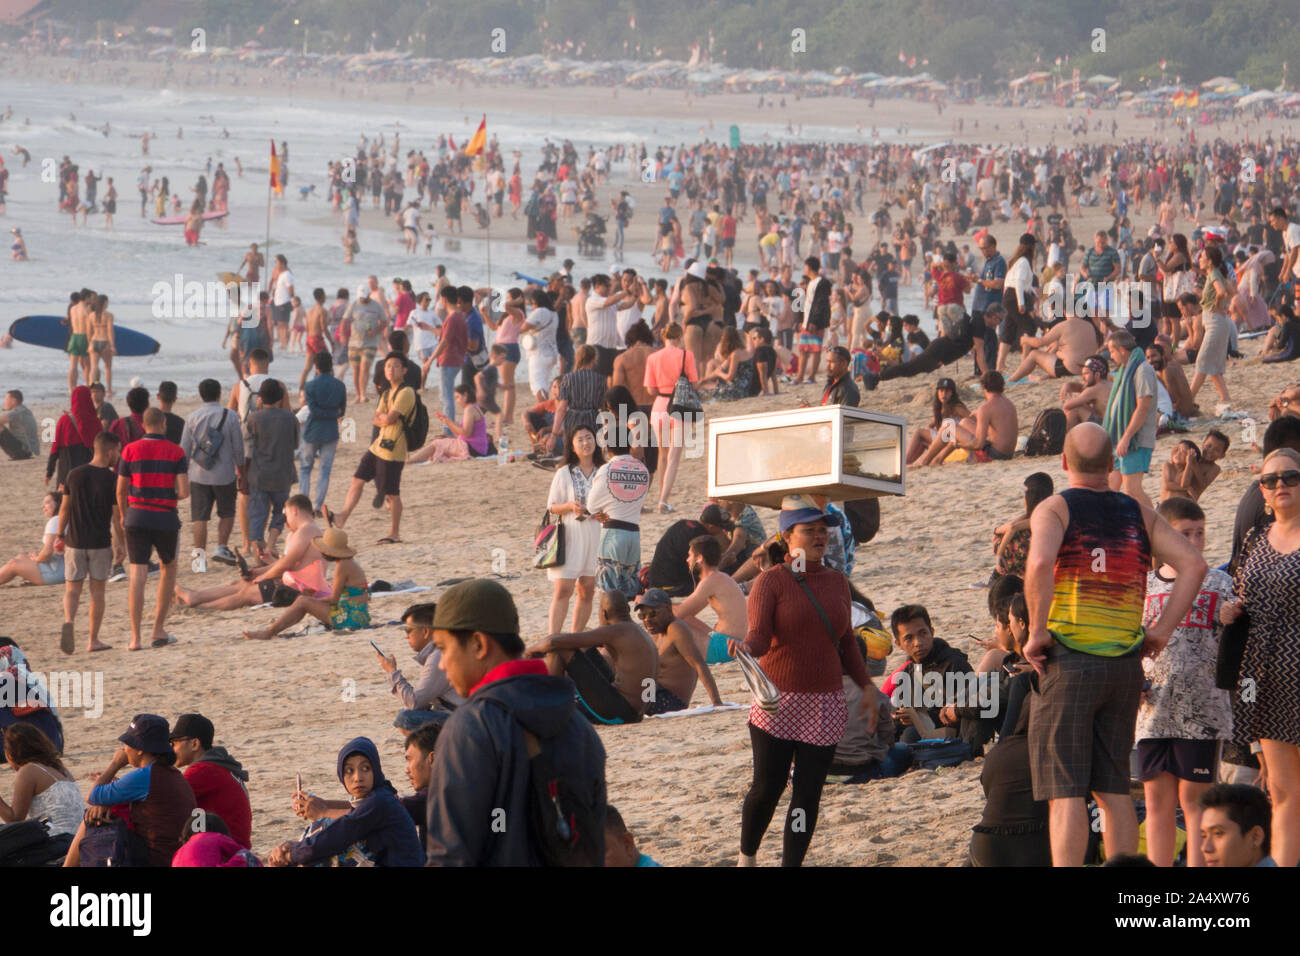 Large crowds of people on Kuta beach in Bali, Indonesia Stock Photo